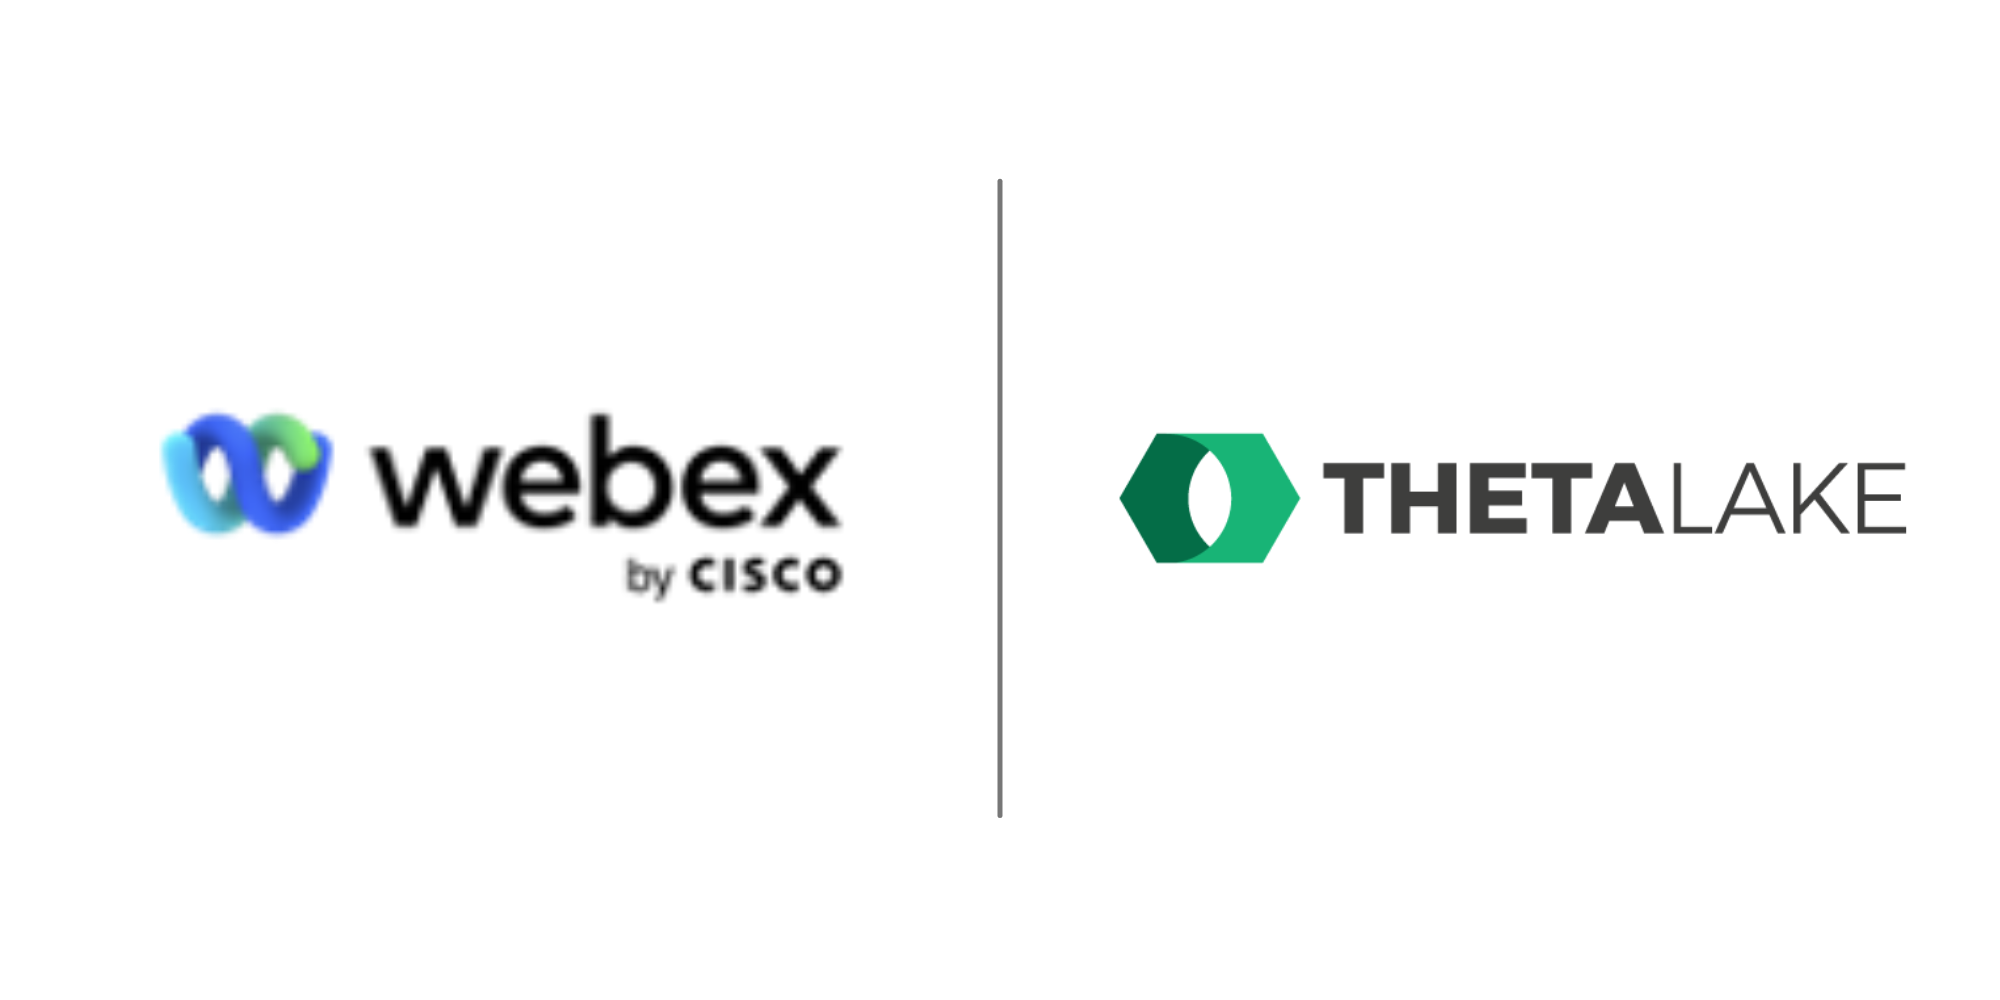 Webex by Cisco and Theta Lake logo